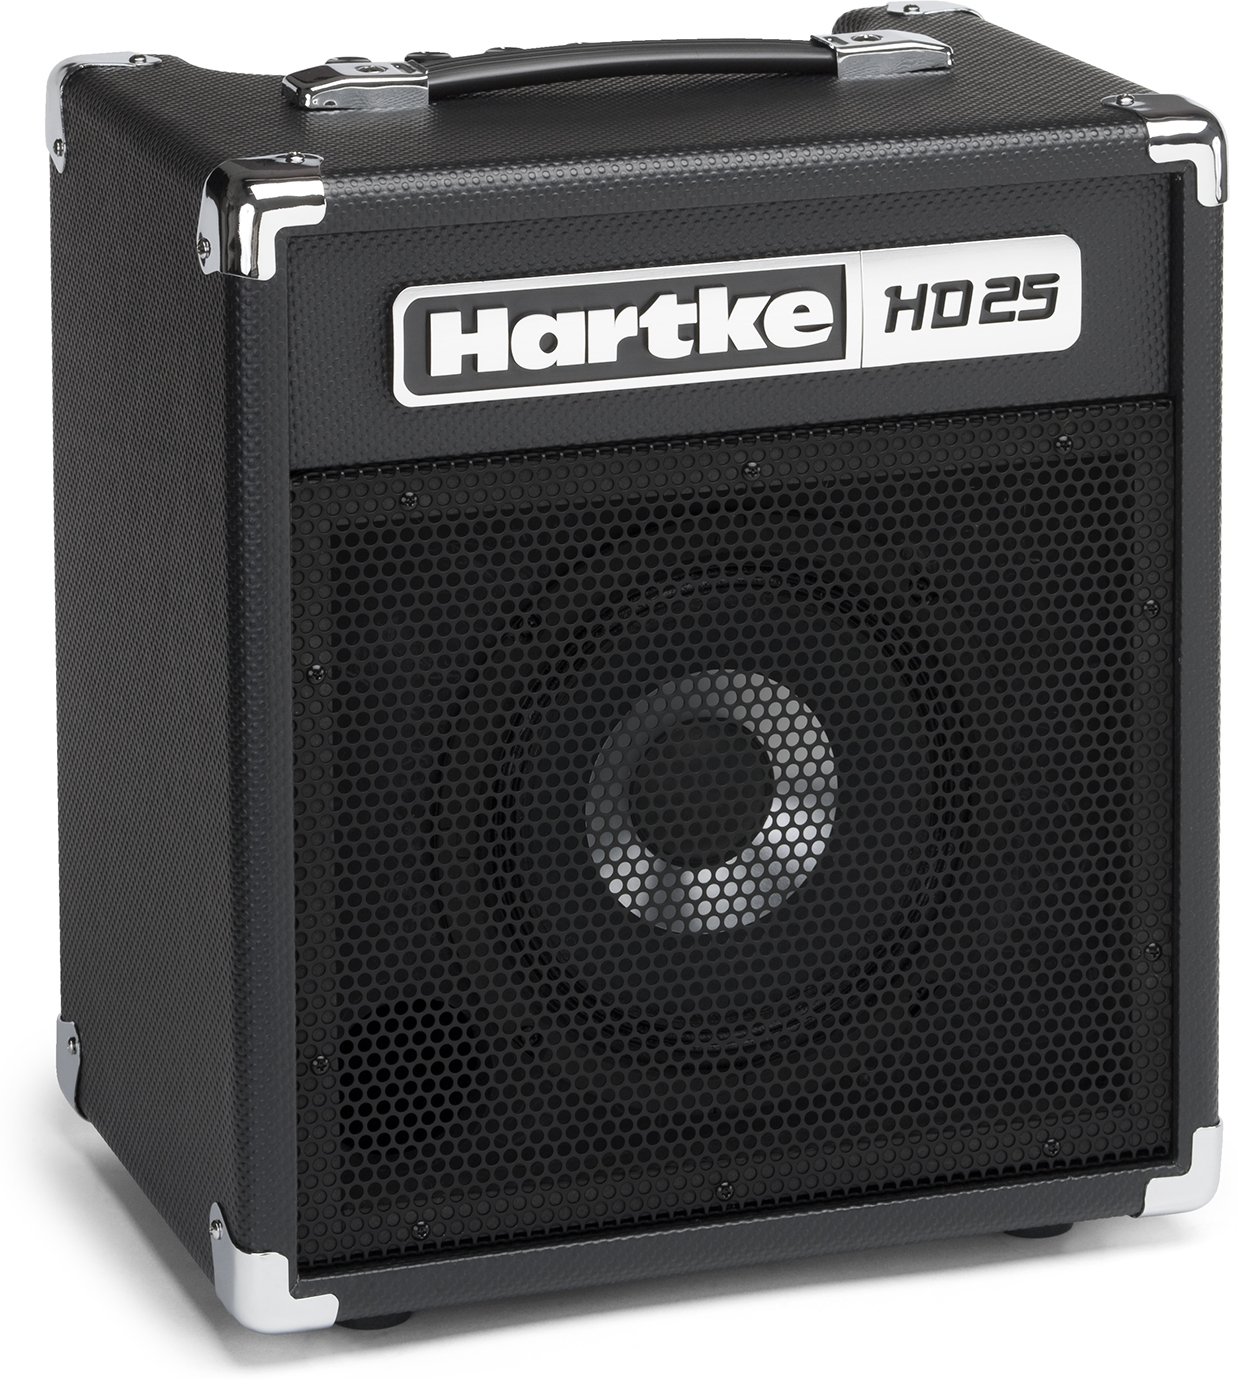 Hartke Hd25 Combo - Bass Combo - Main picture